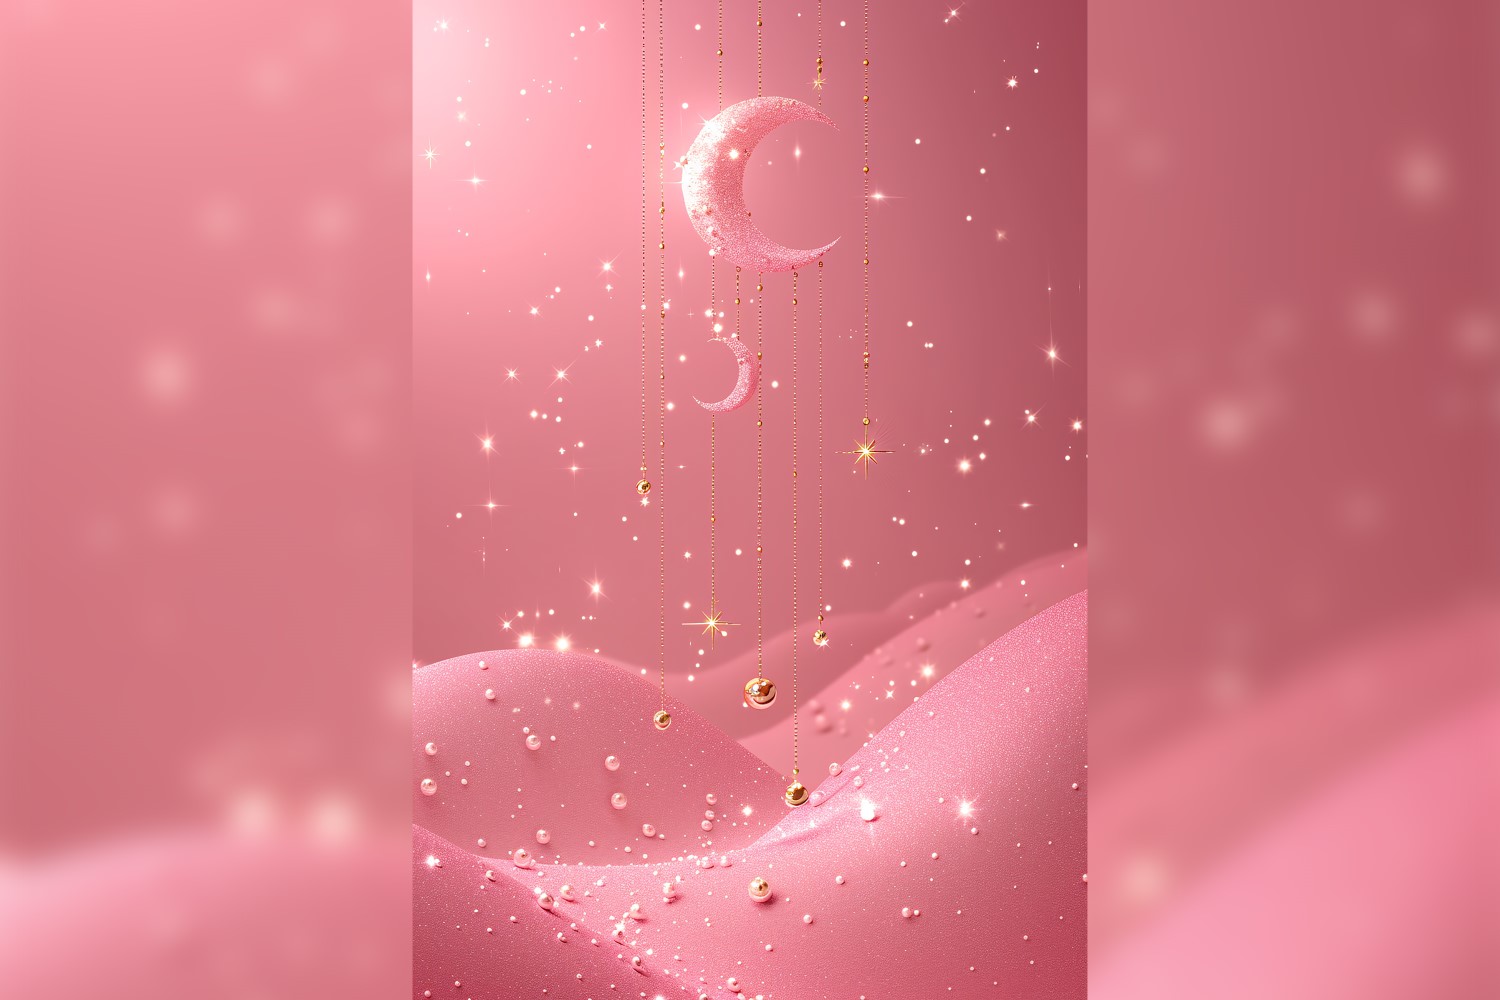 Ramadan Kareem greeting card poster design with moon & star